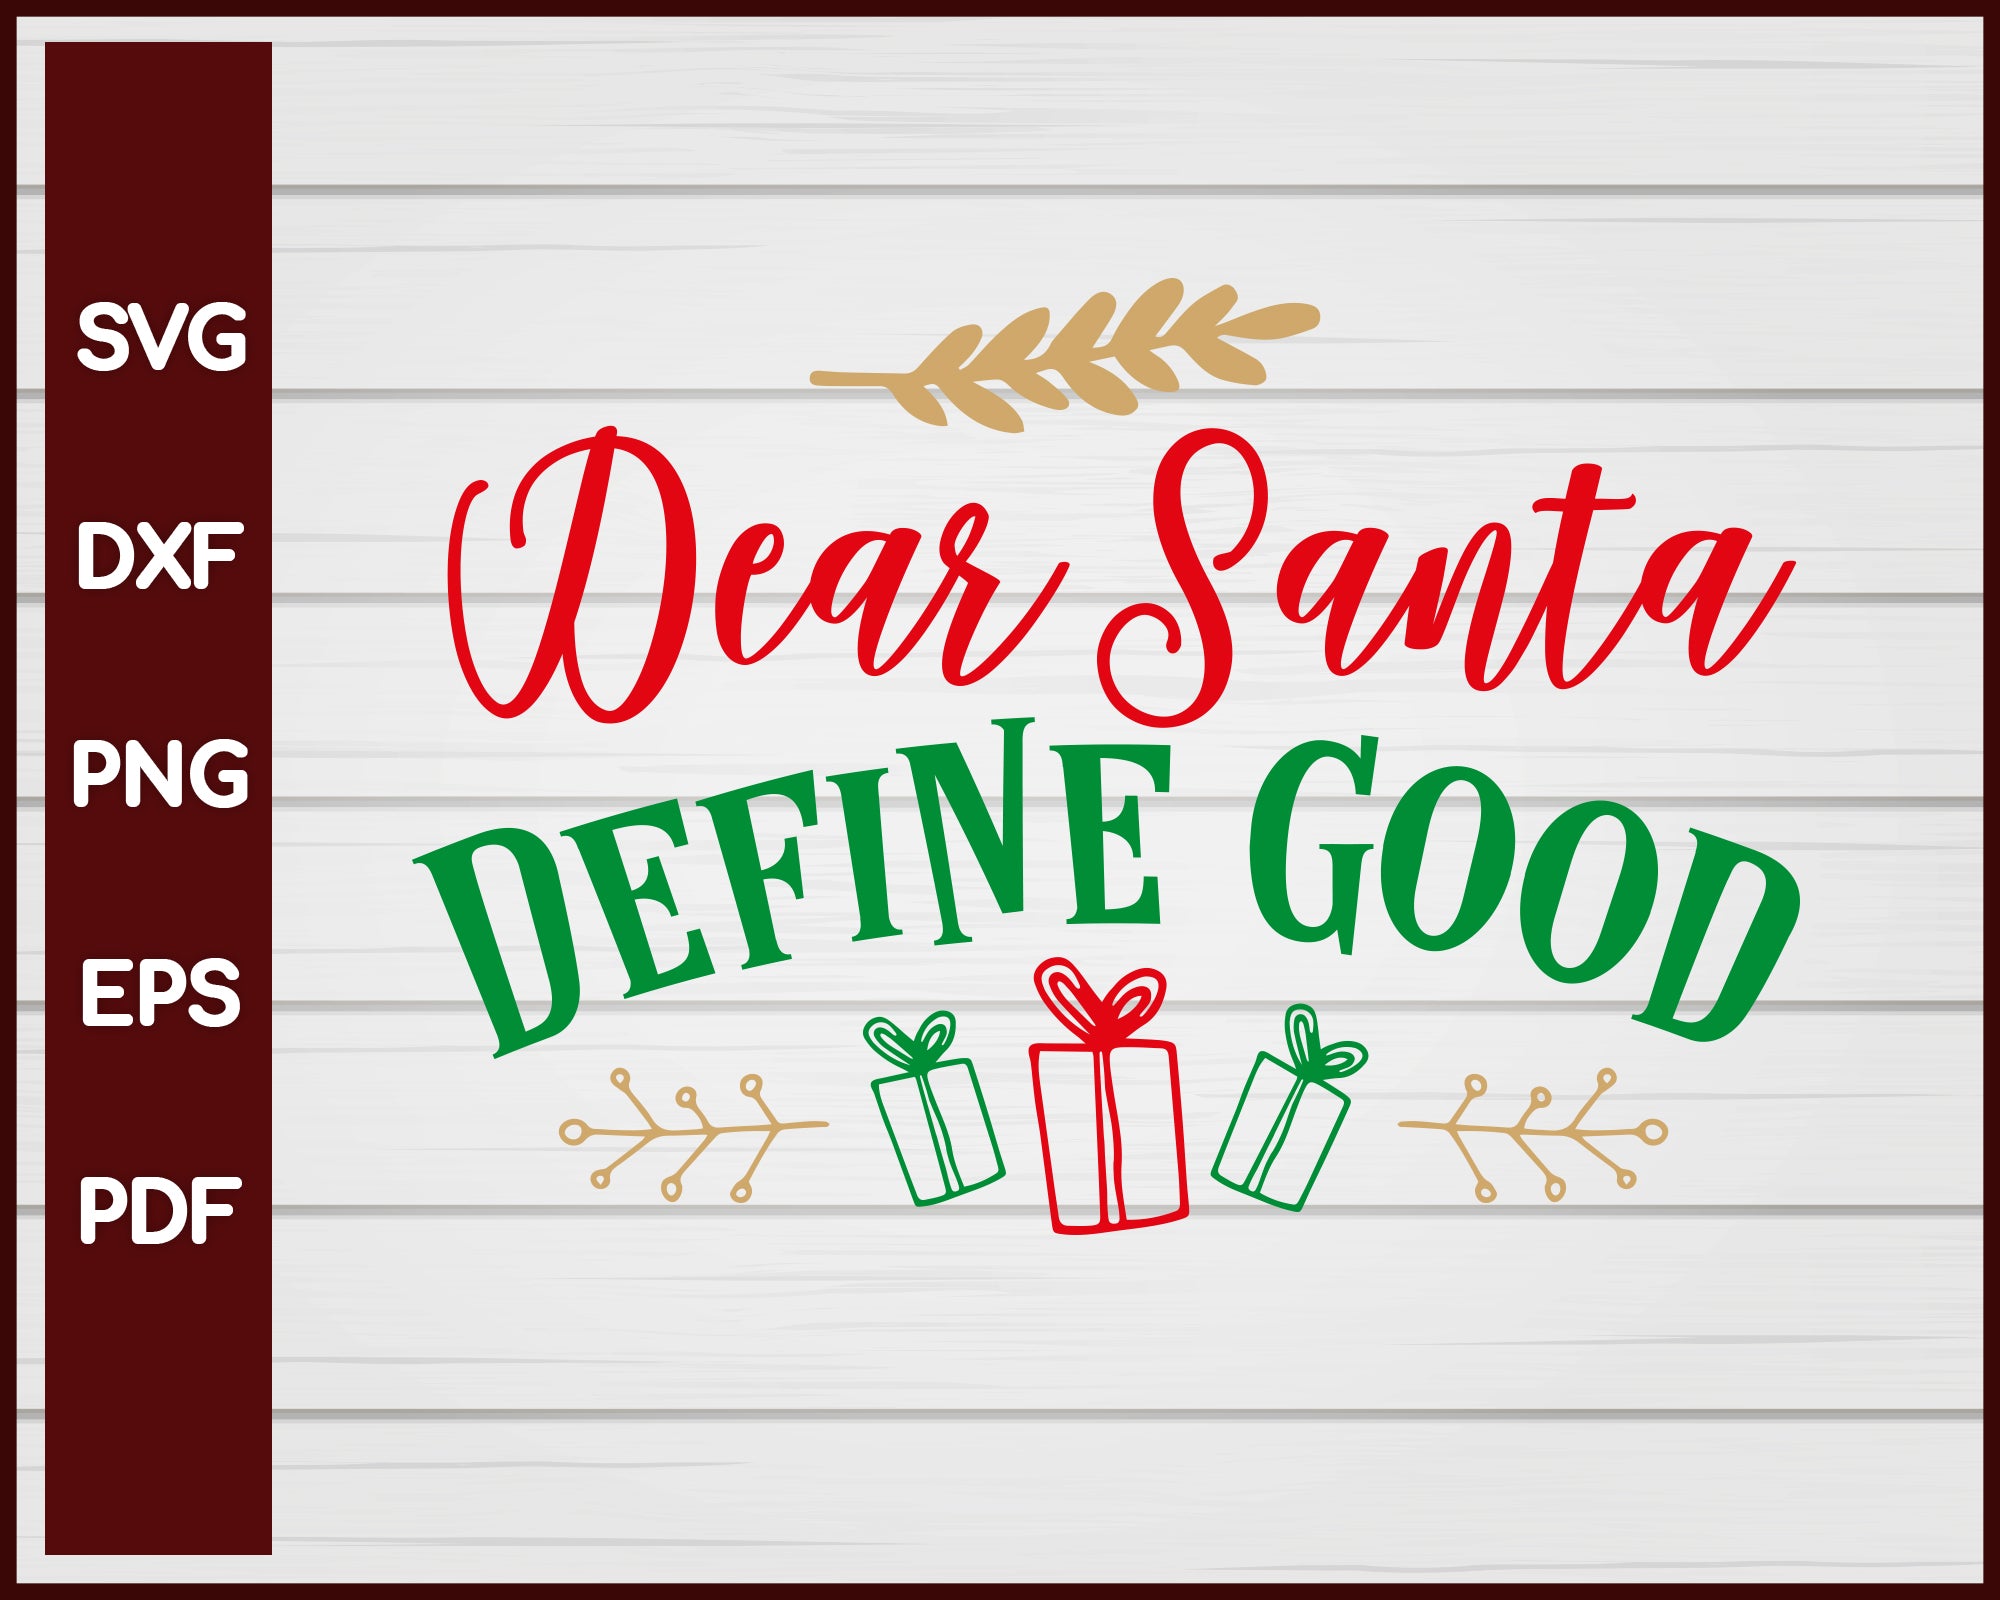 Dear Santa Define Good Christmas svg